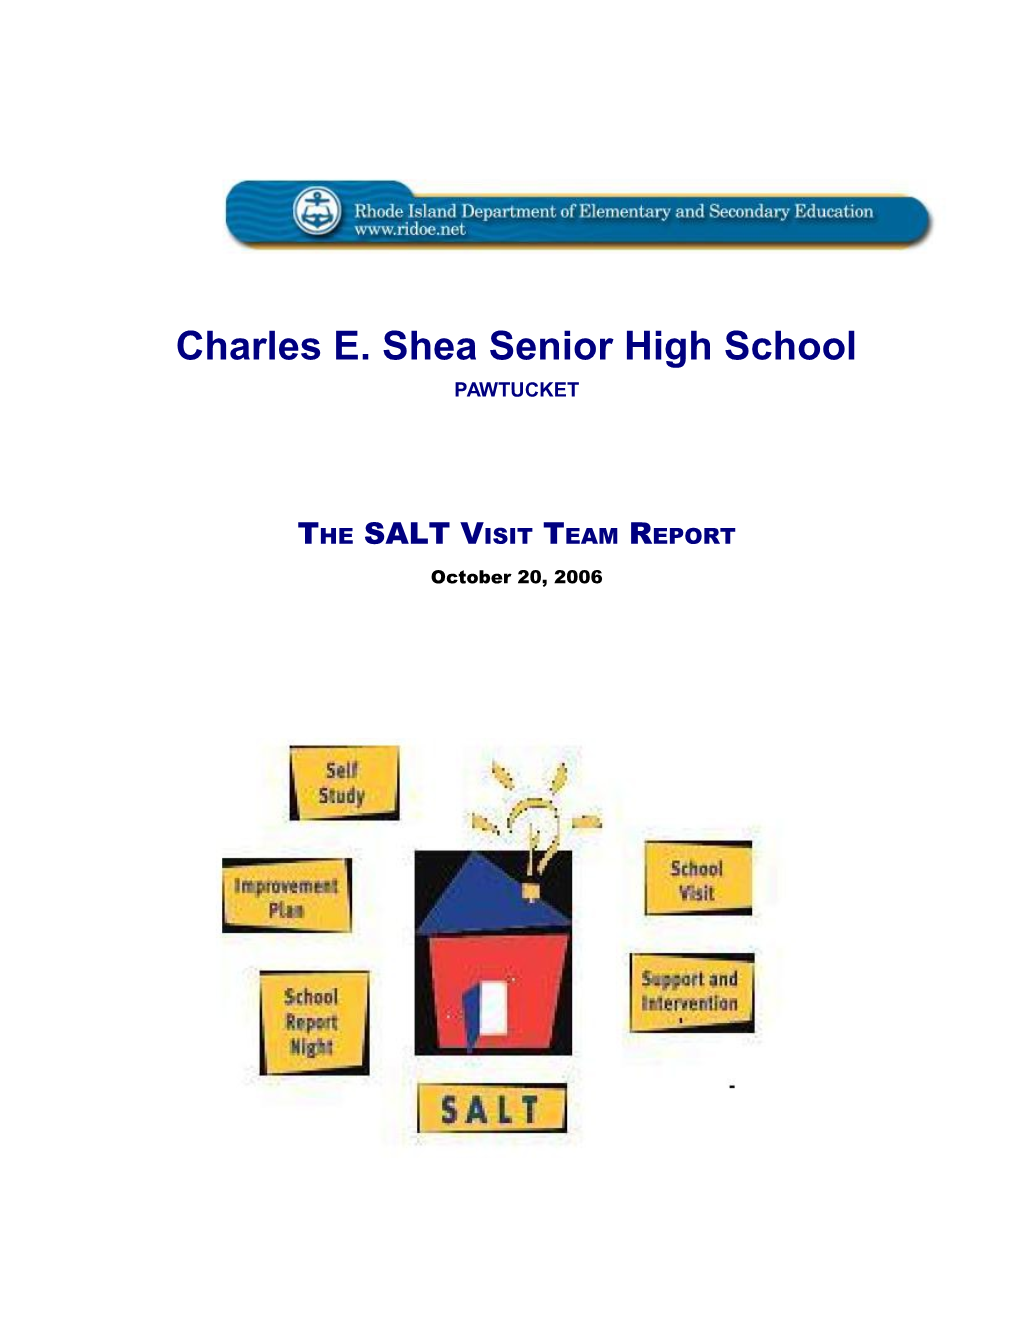 Charlese.Sheasenior High School SALT Visit Team Reportpage 1